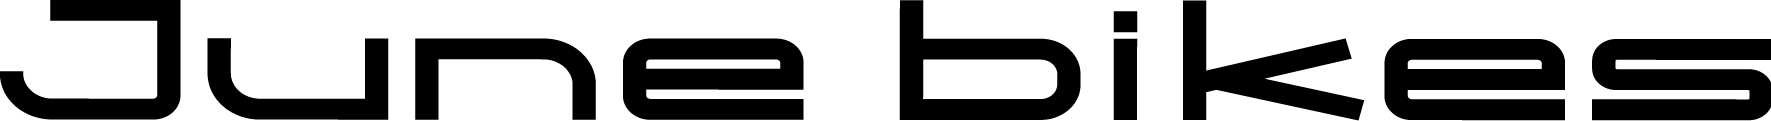 junebikes logo 3